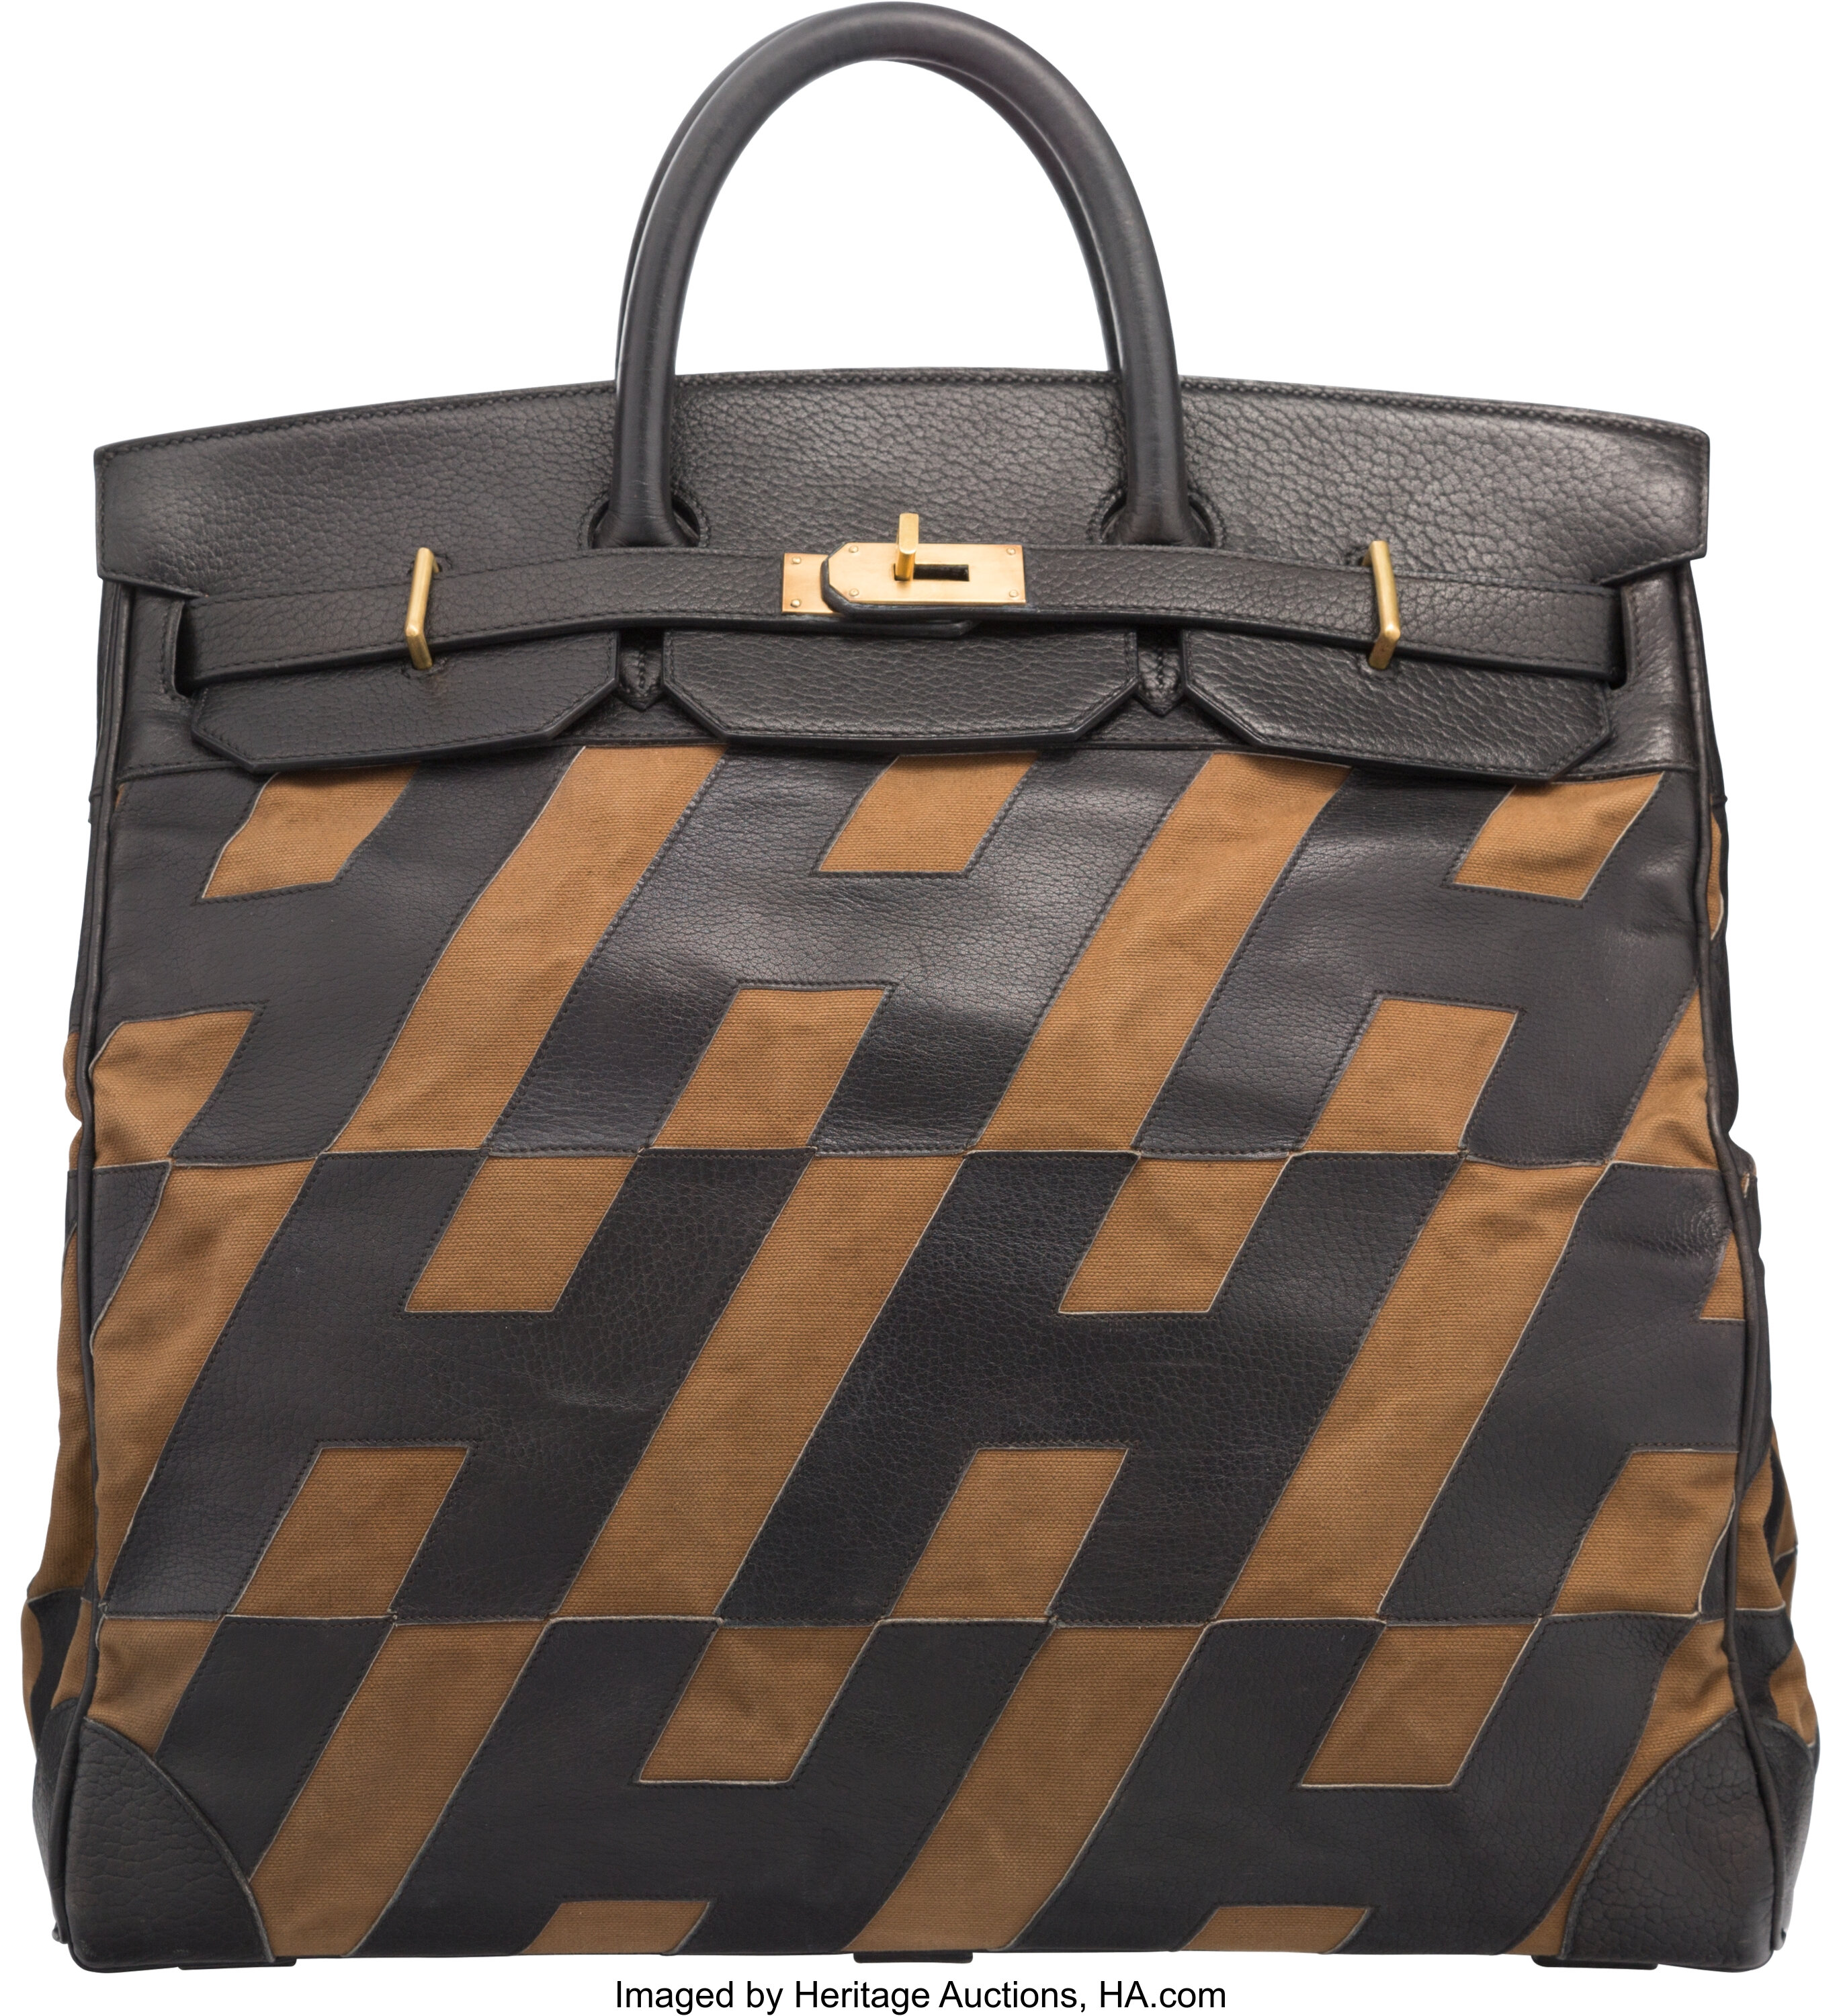 Sold at Auction: Hermes Birkin 25 Bag, Etoupe Neutral Togo Leather,  Palladium Hardware